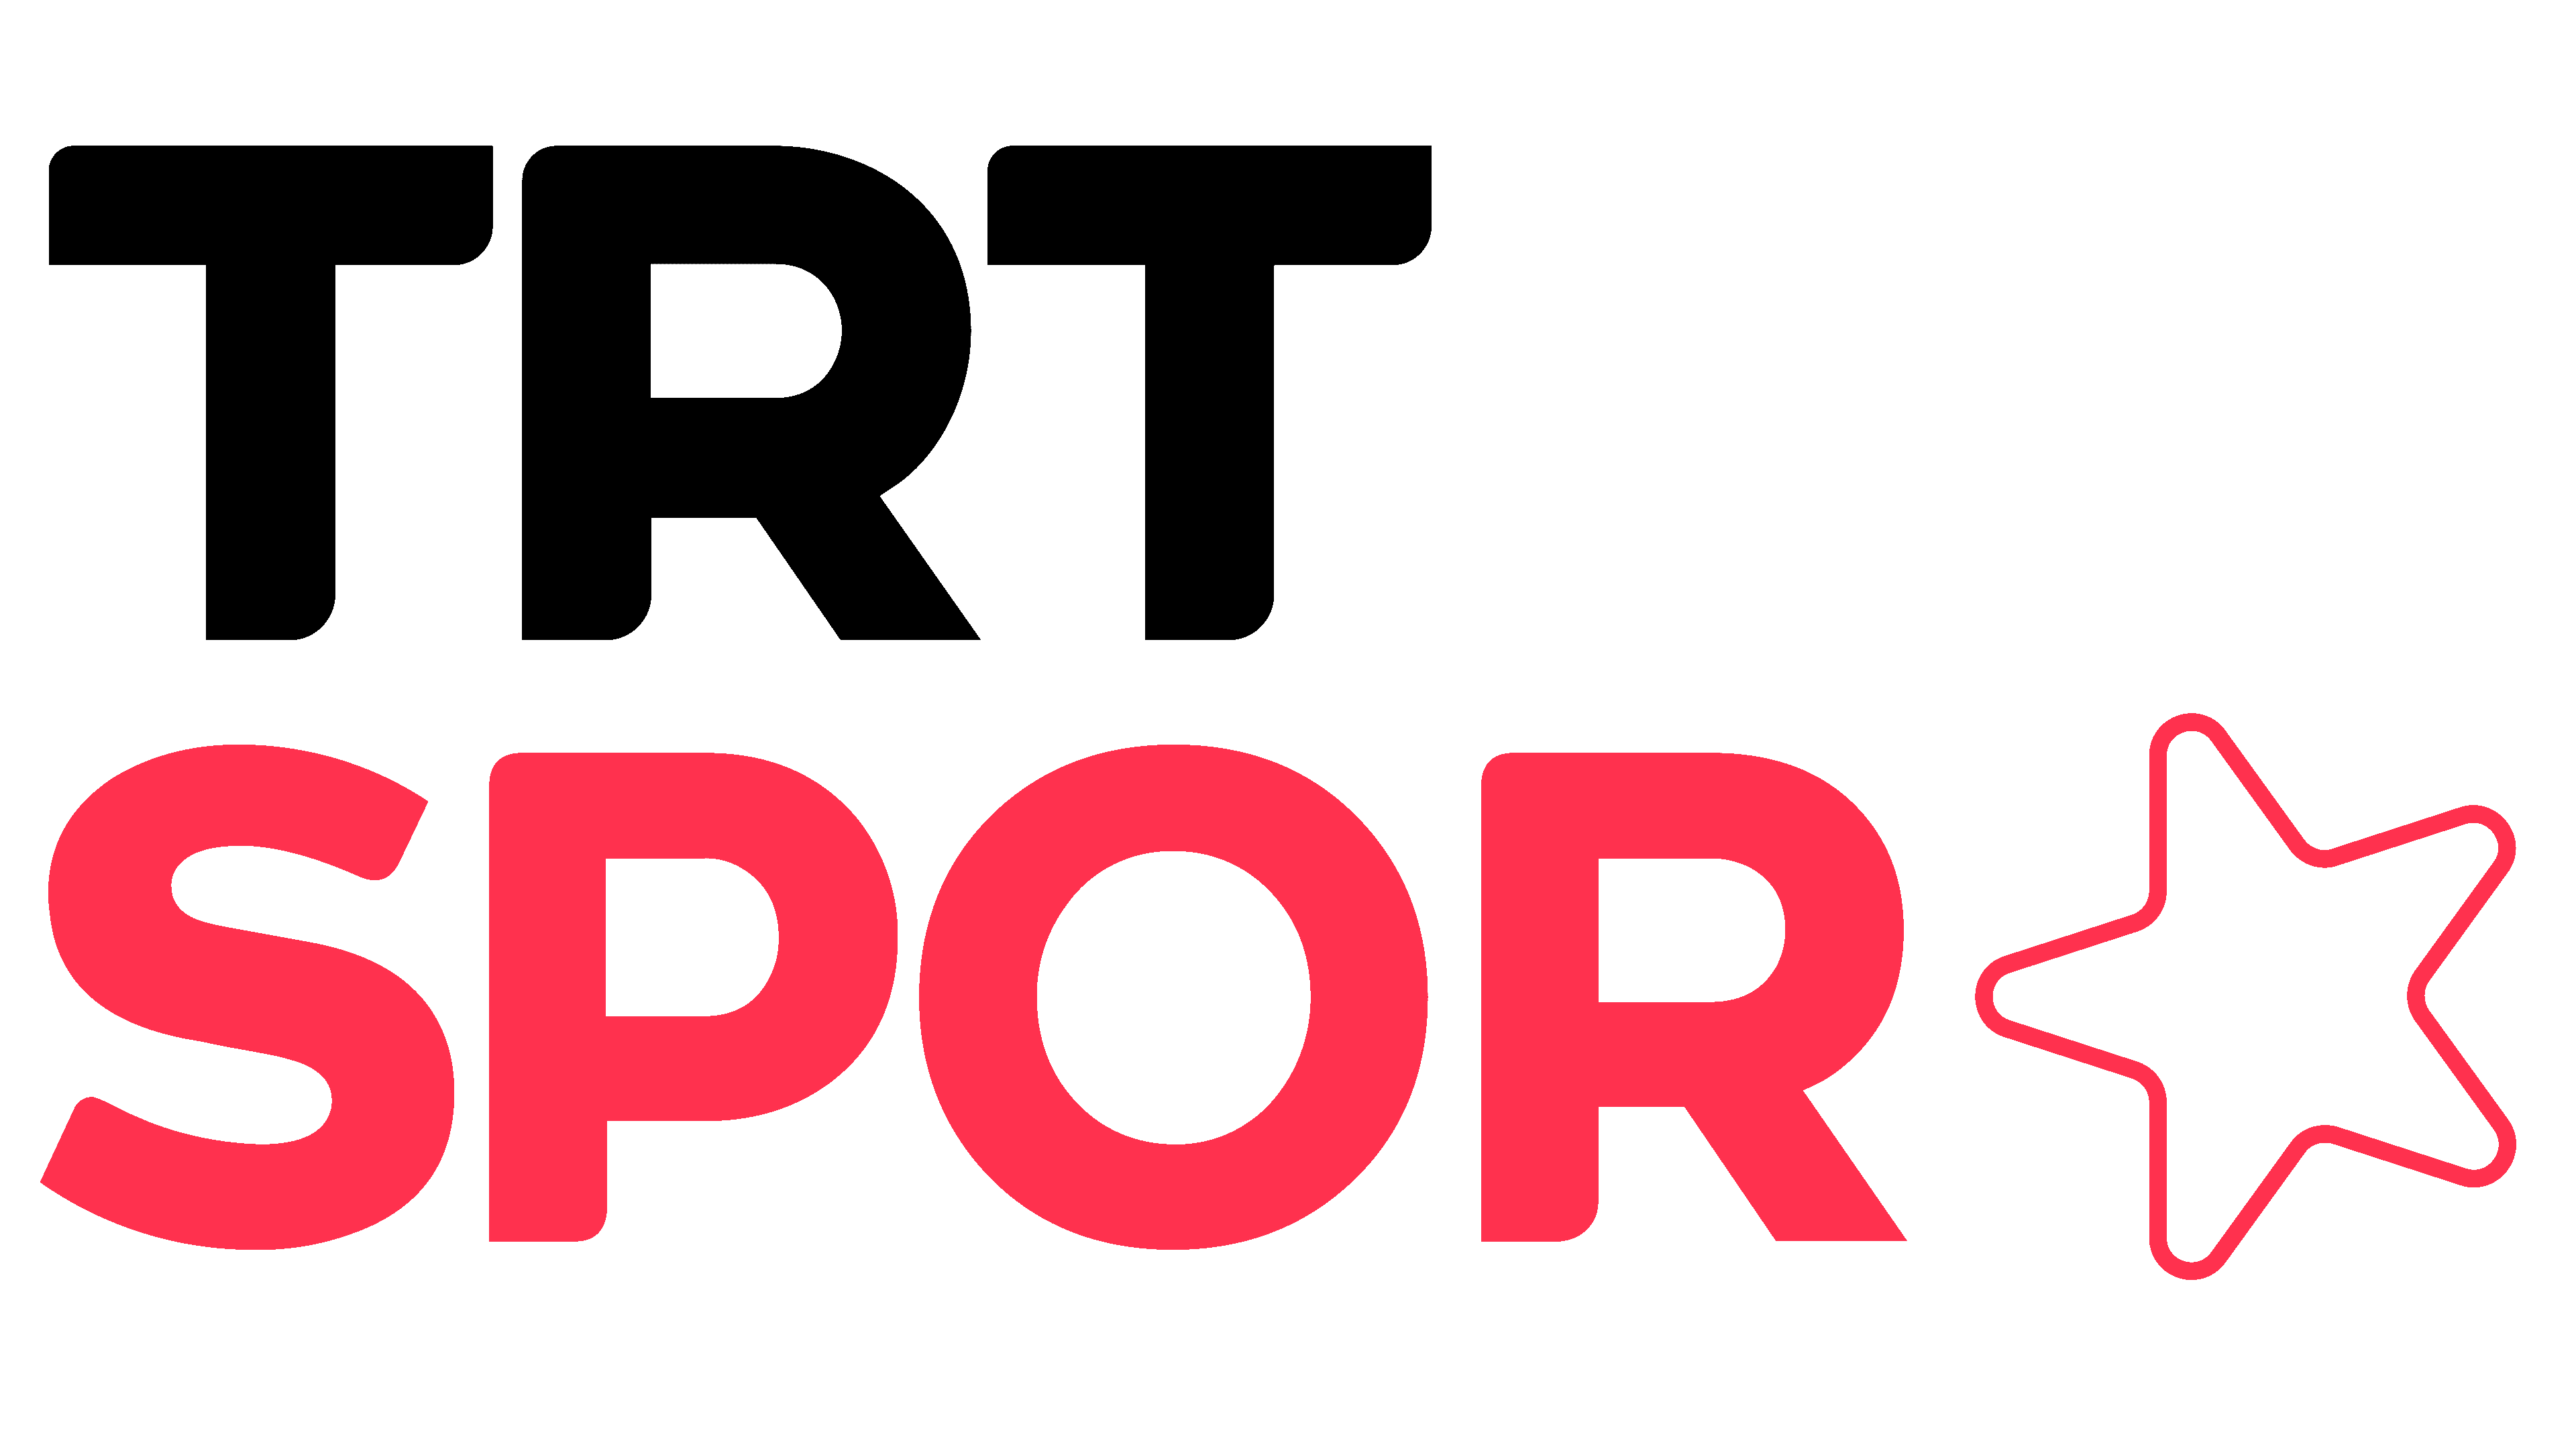 new sports channel for youth trt spor yildiz presented in turkey